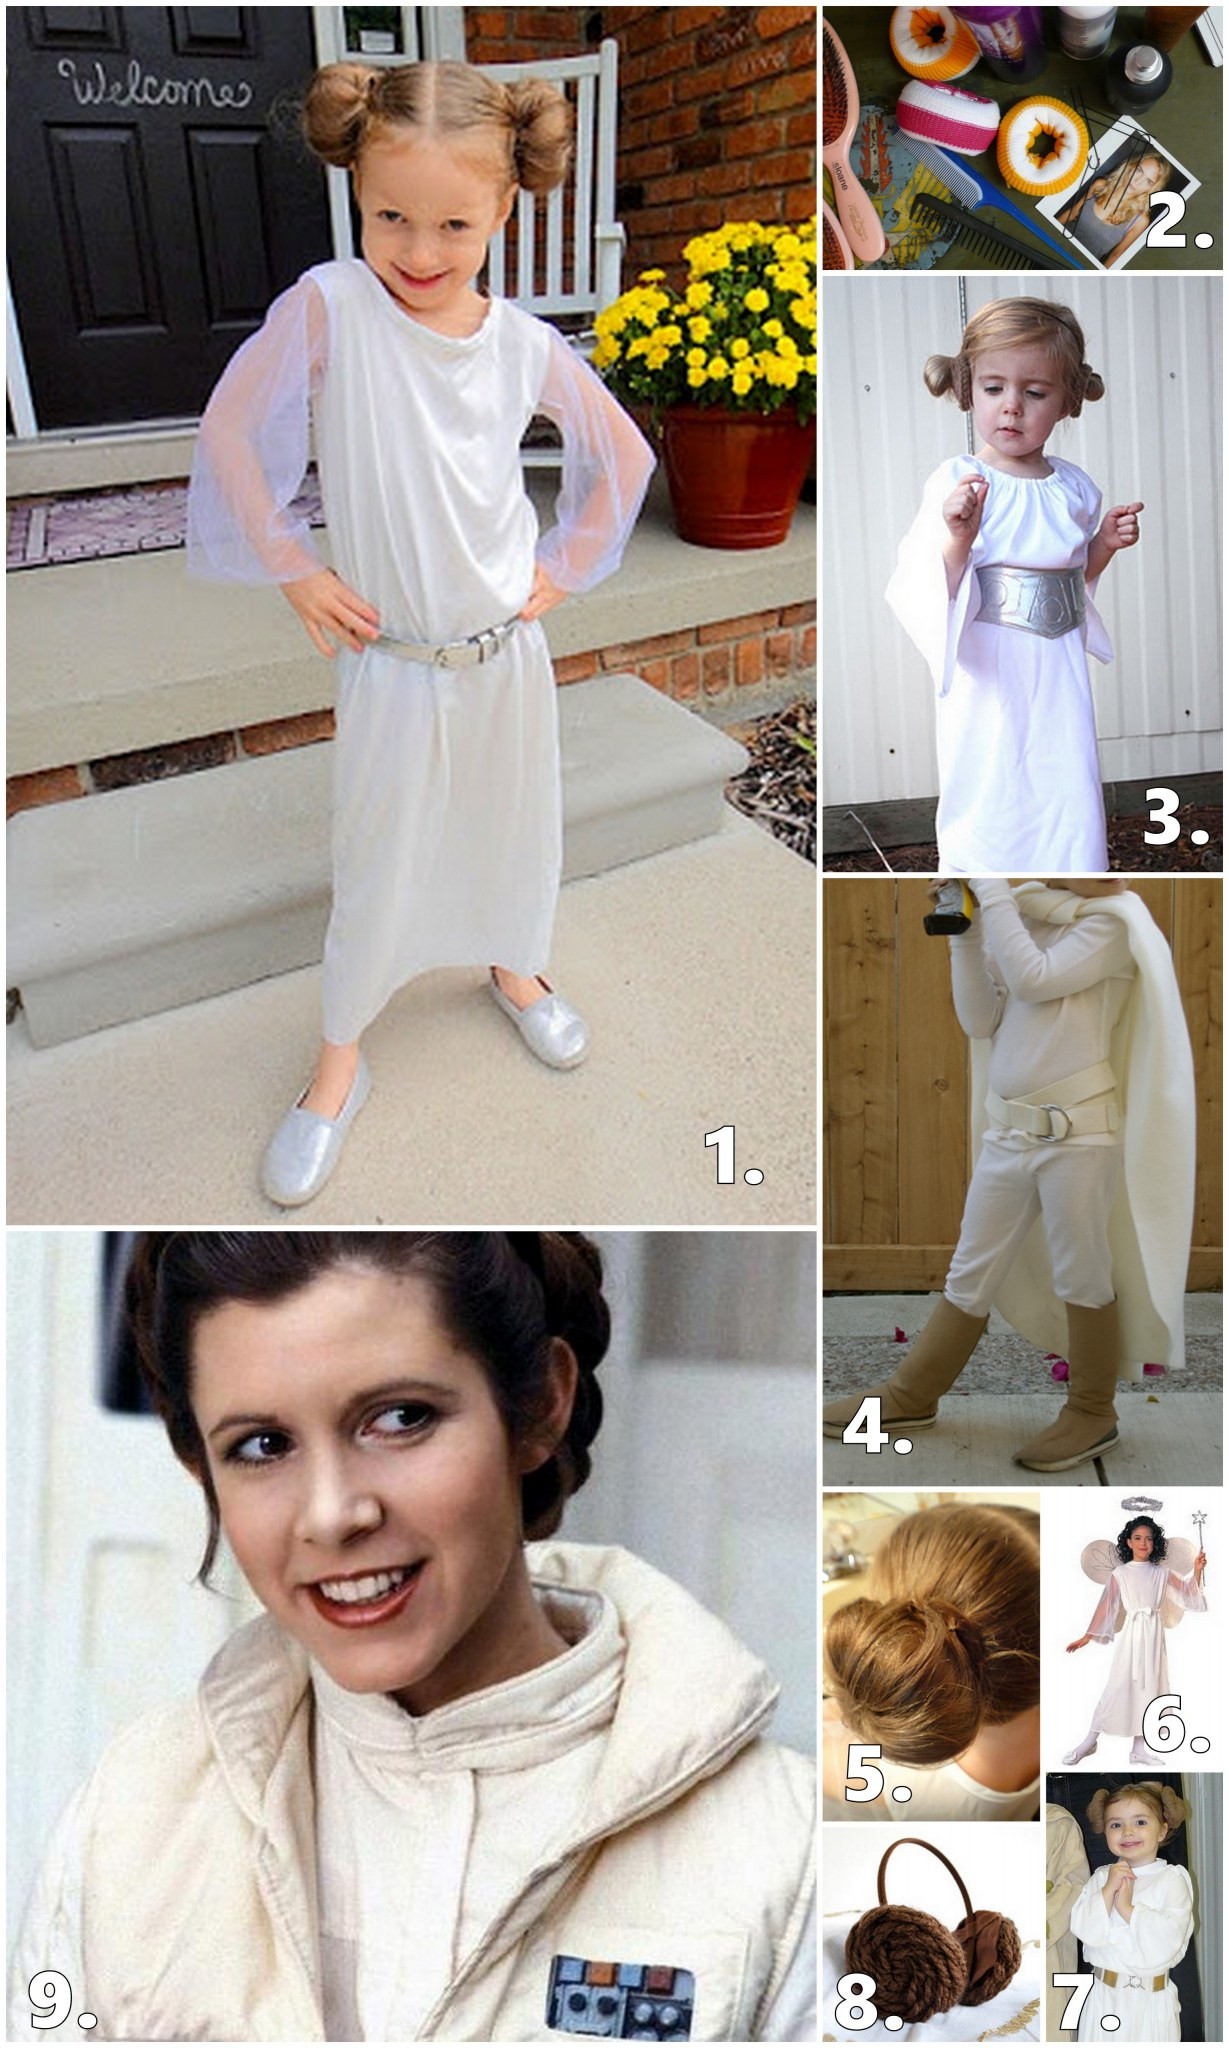 Best ideas about Princess Leia Costume DIY
. Save or Pin Princess Leia Costume Ideas Now.